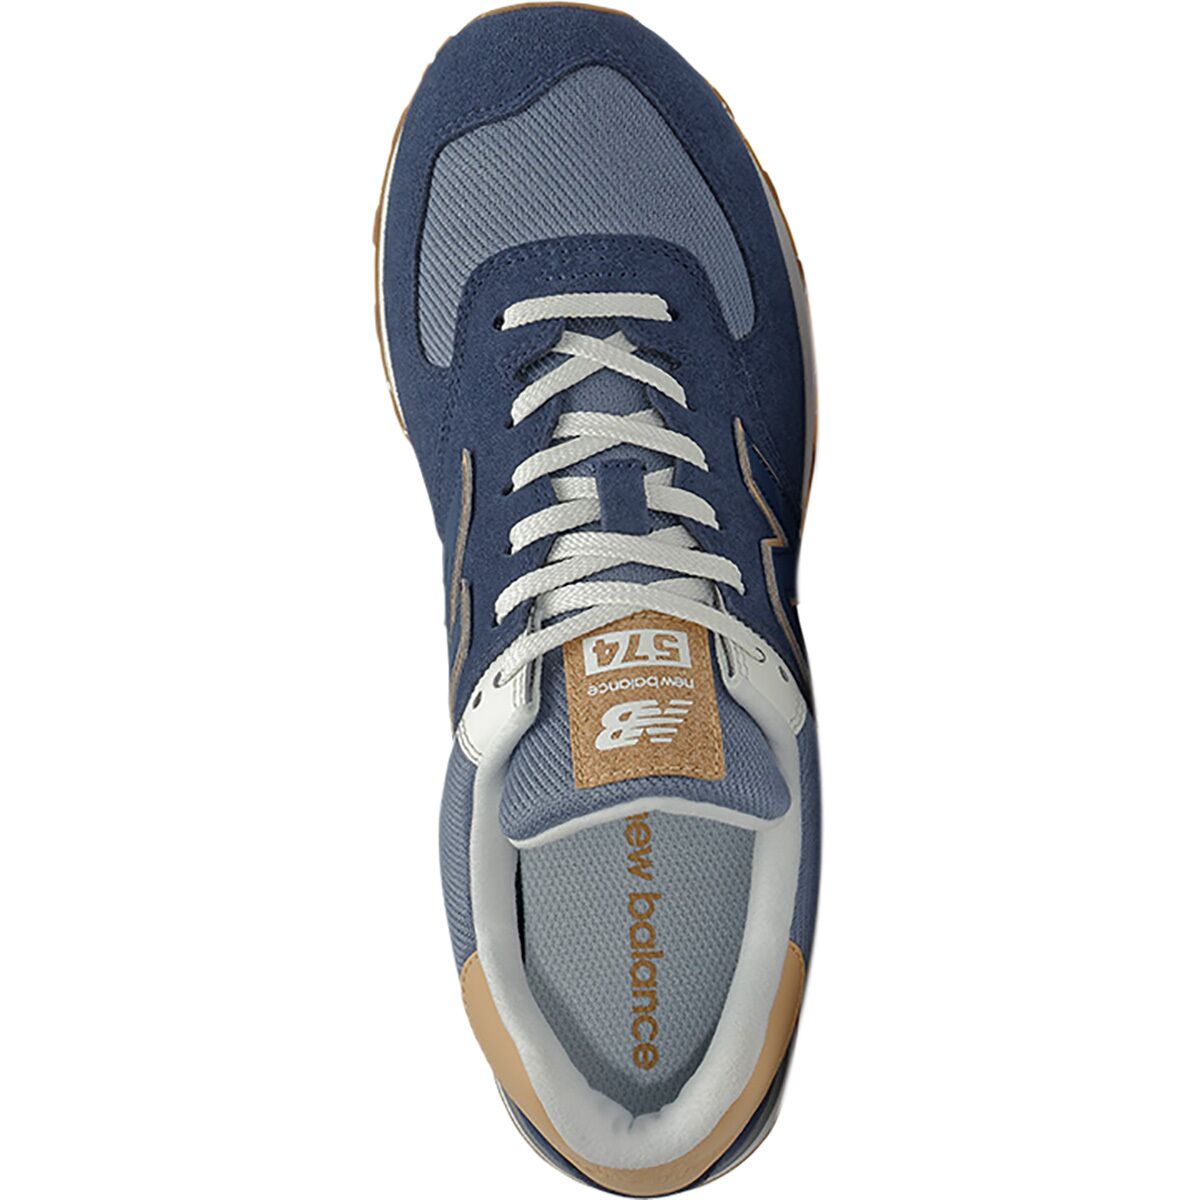 New Balance 574 Pack Shoe - Men's - Footwear